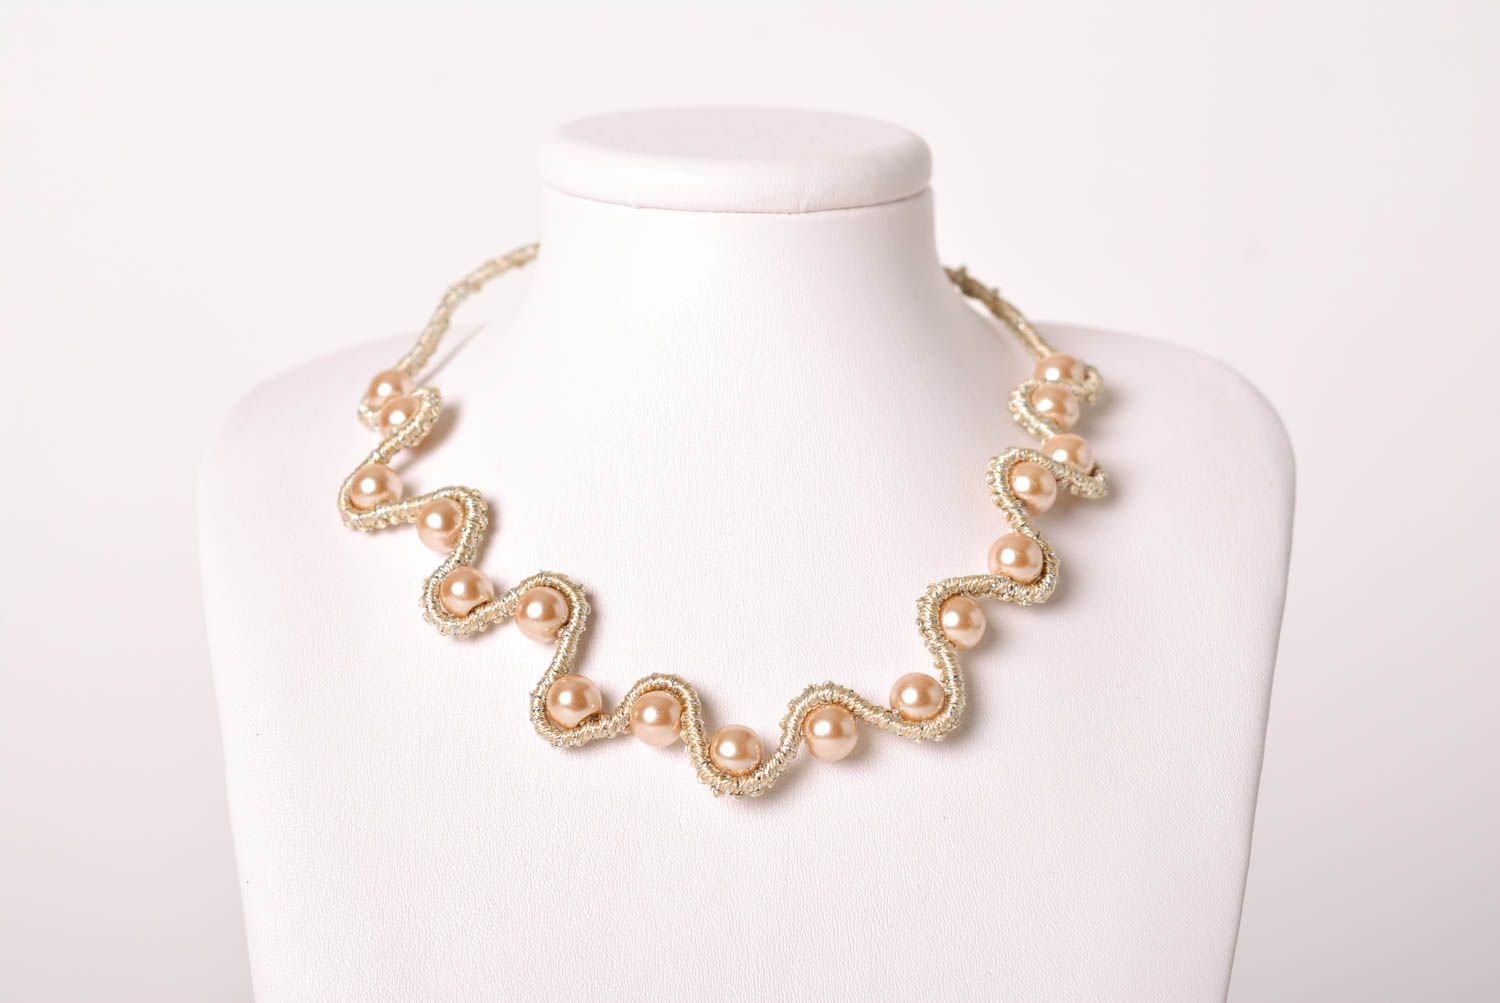 Handmade tender necklace stylish textile necklace elegant accessory gift photo 2